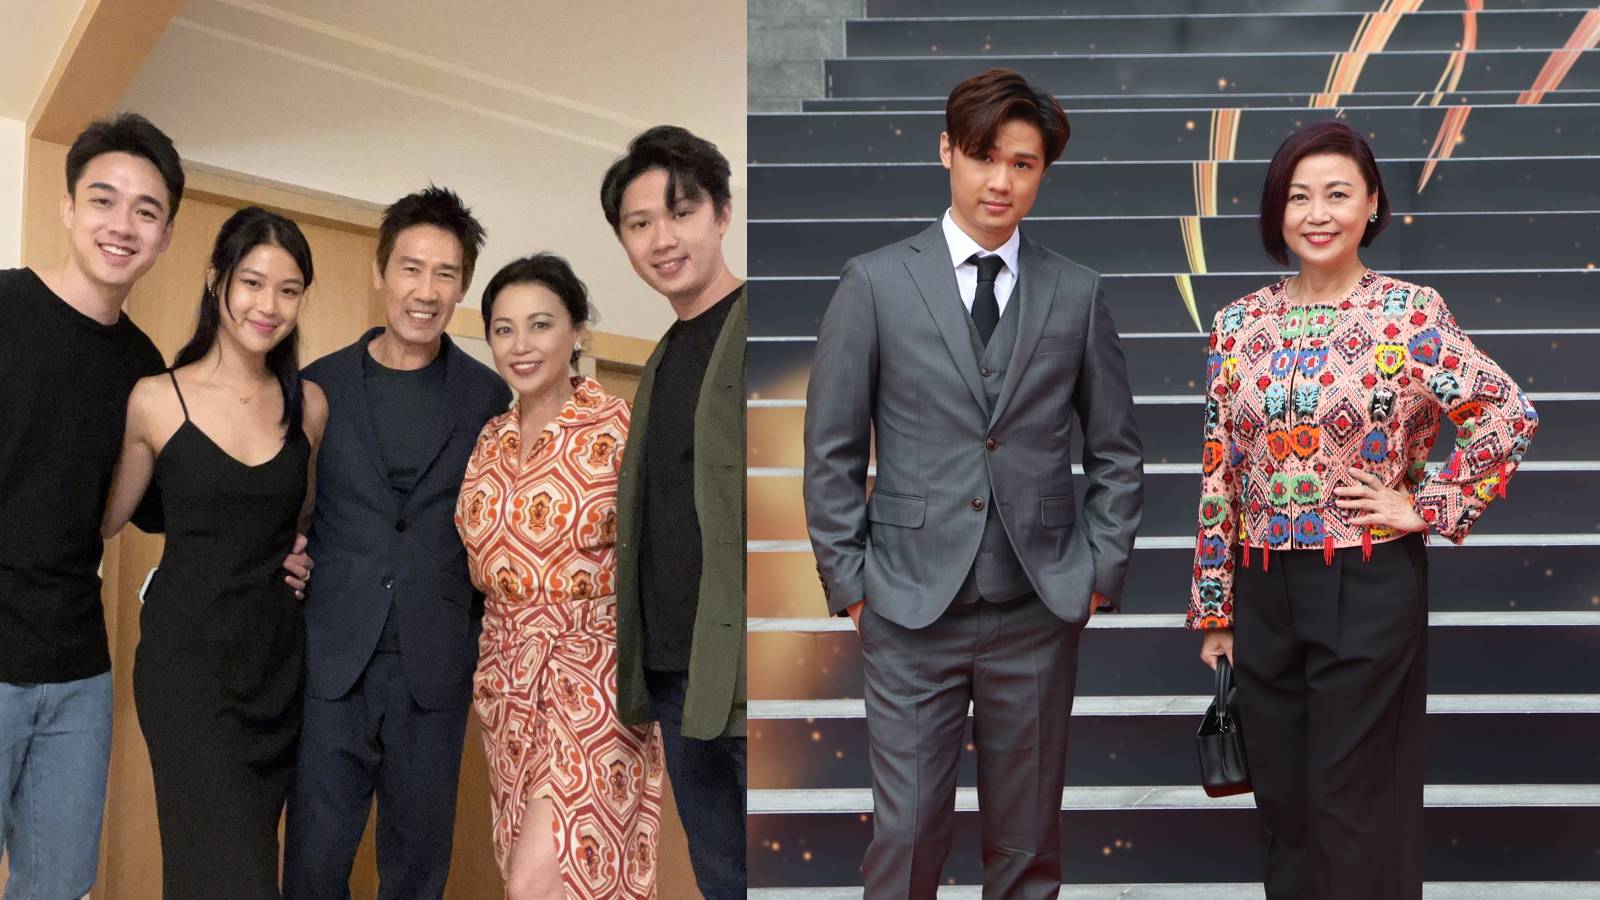 Chen Xi was the 'family representative' at Star Awards 2022